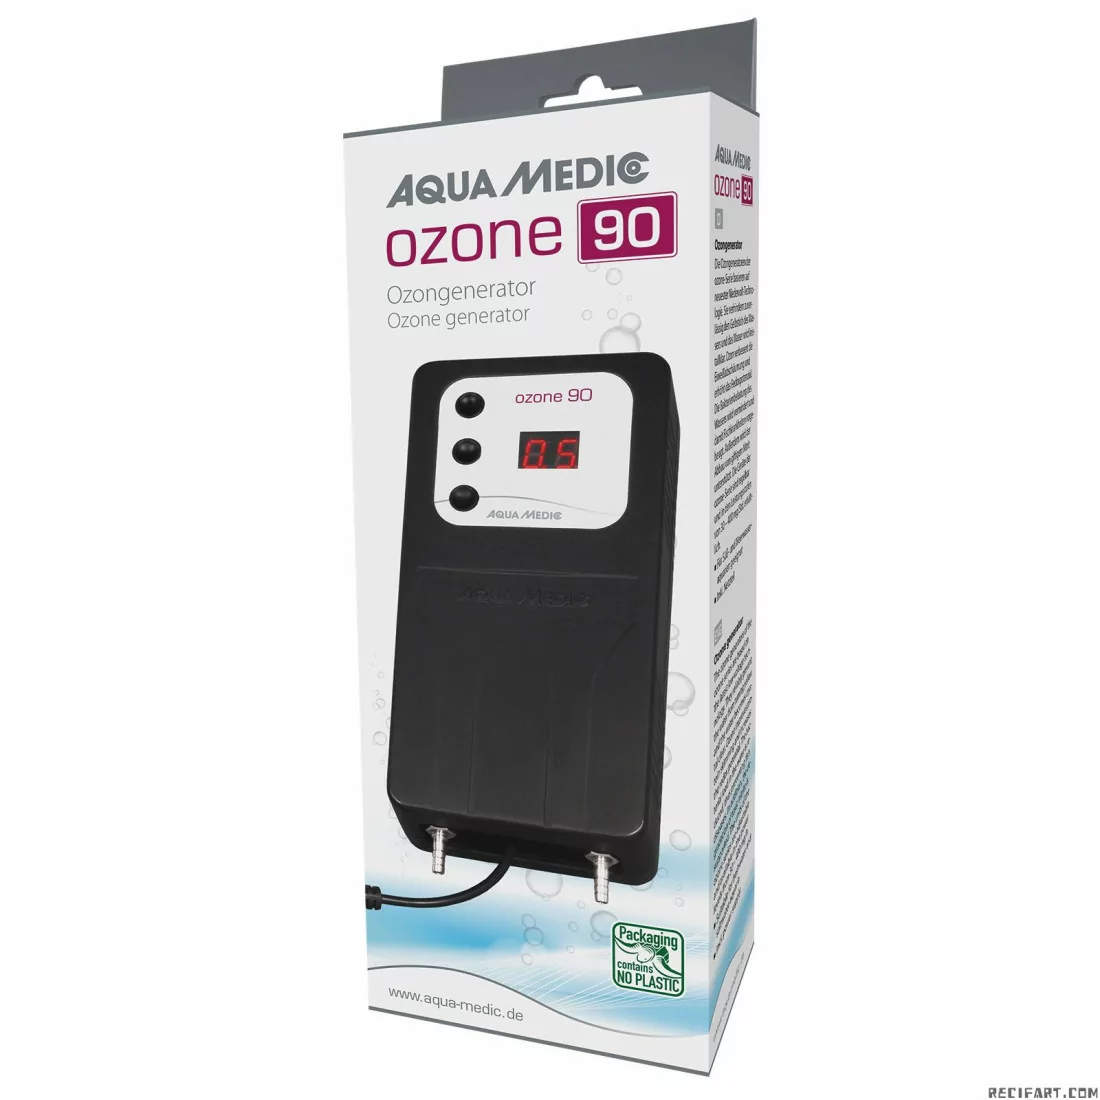 Ozone 90